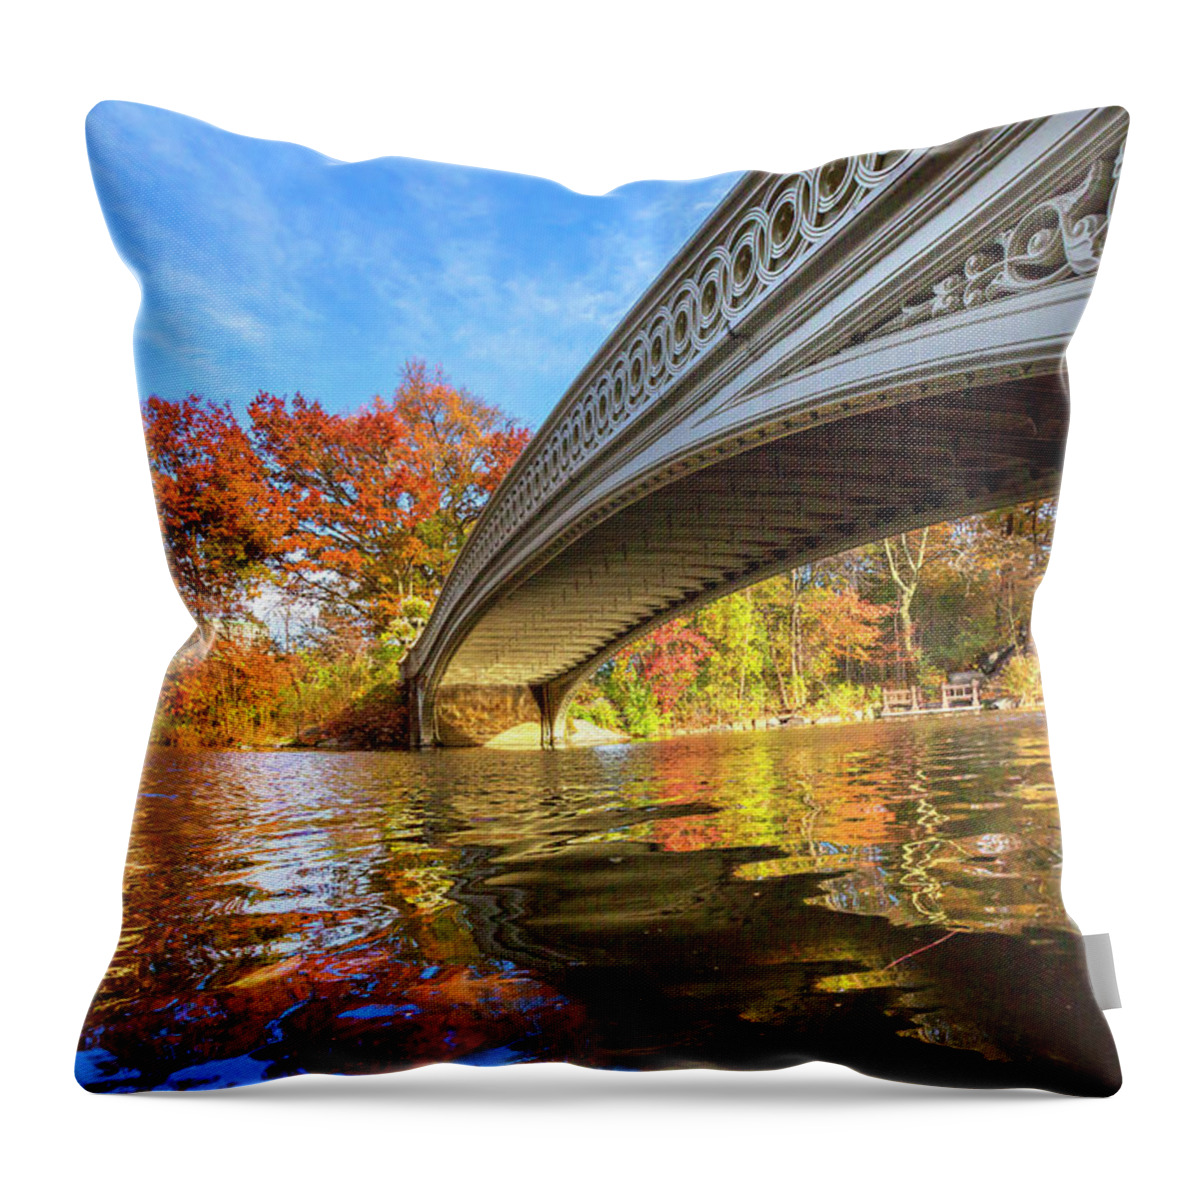 Estock Throw Pillow featuring the digital art Bow Bridge In Central Park, Manhattan #11 by Claudia Uripos